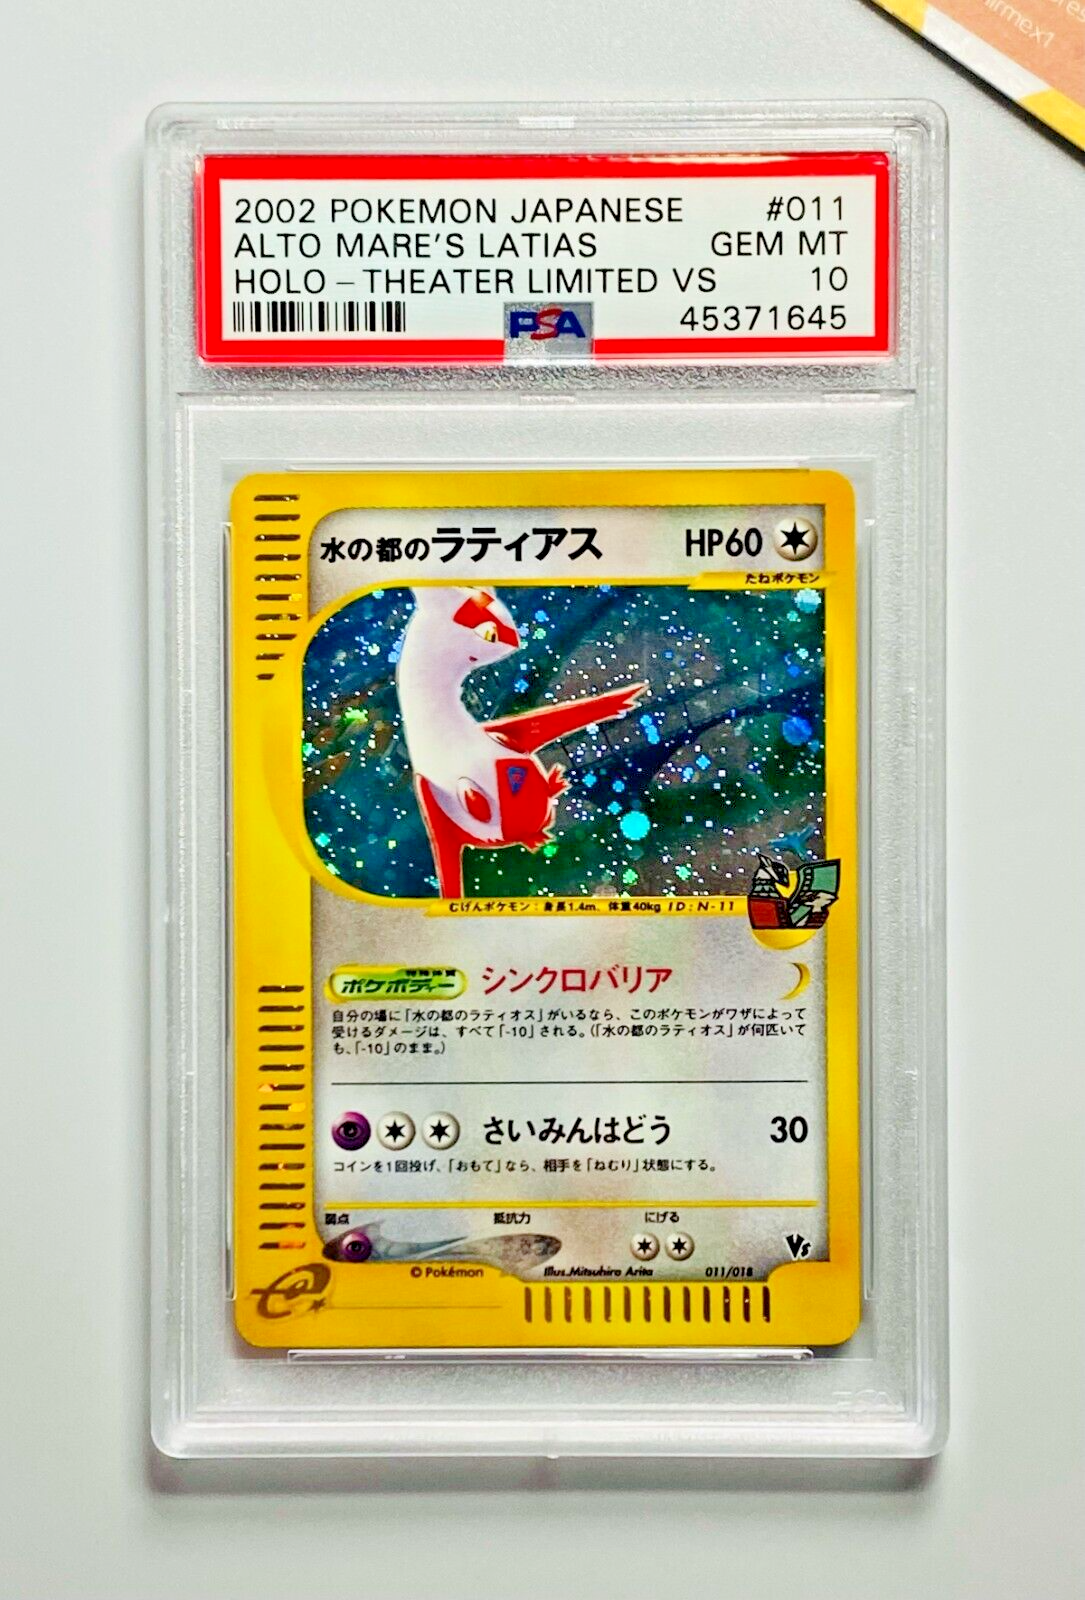 Pokemon PSA 10 Latias Alto Mares 011 Holo Theater Limited VS 2002 Japanese